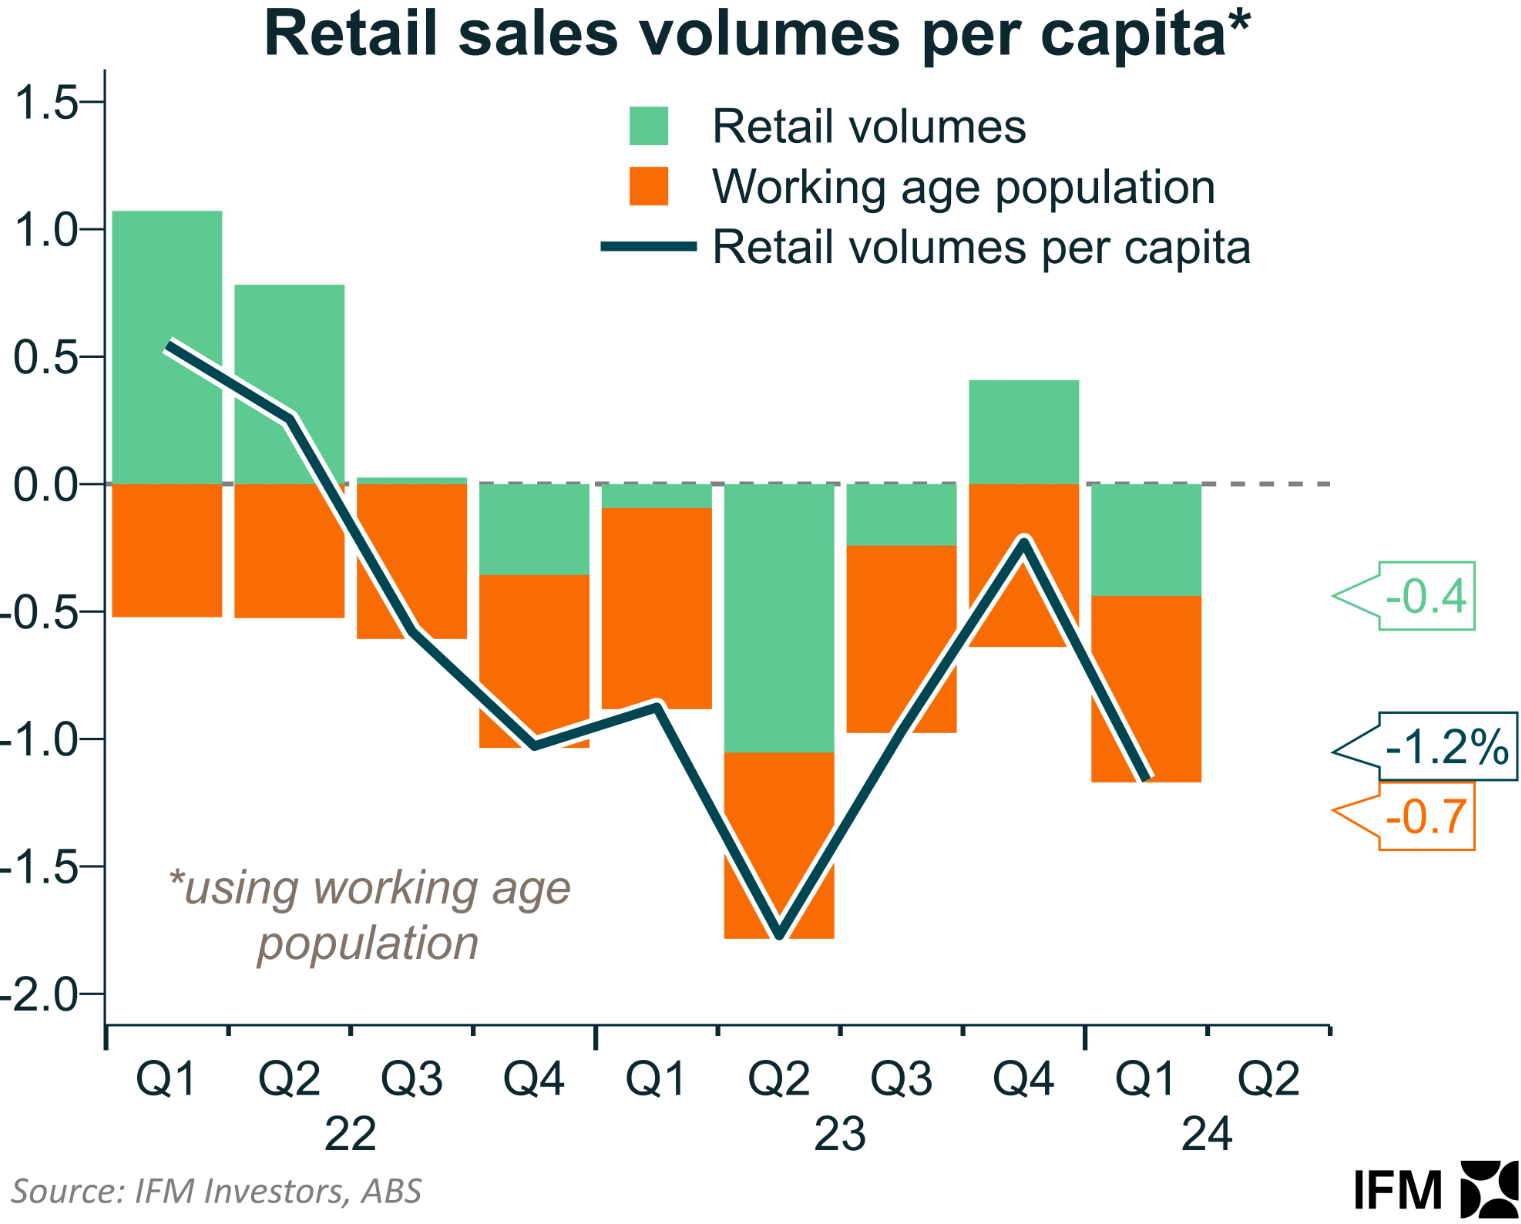 Retail sales volumes per capita